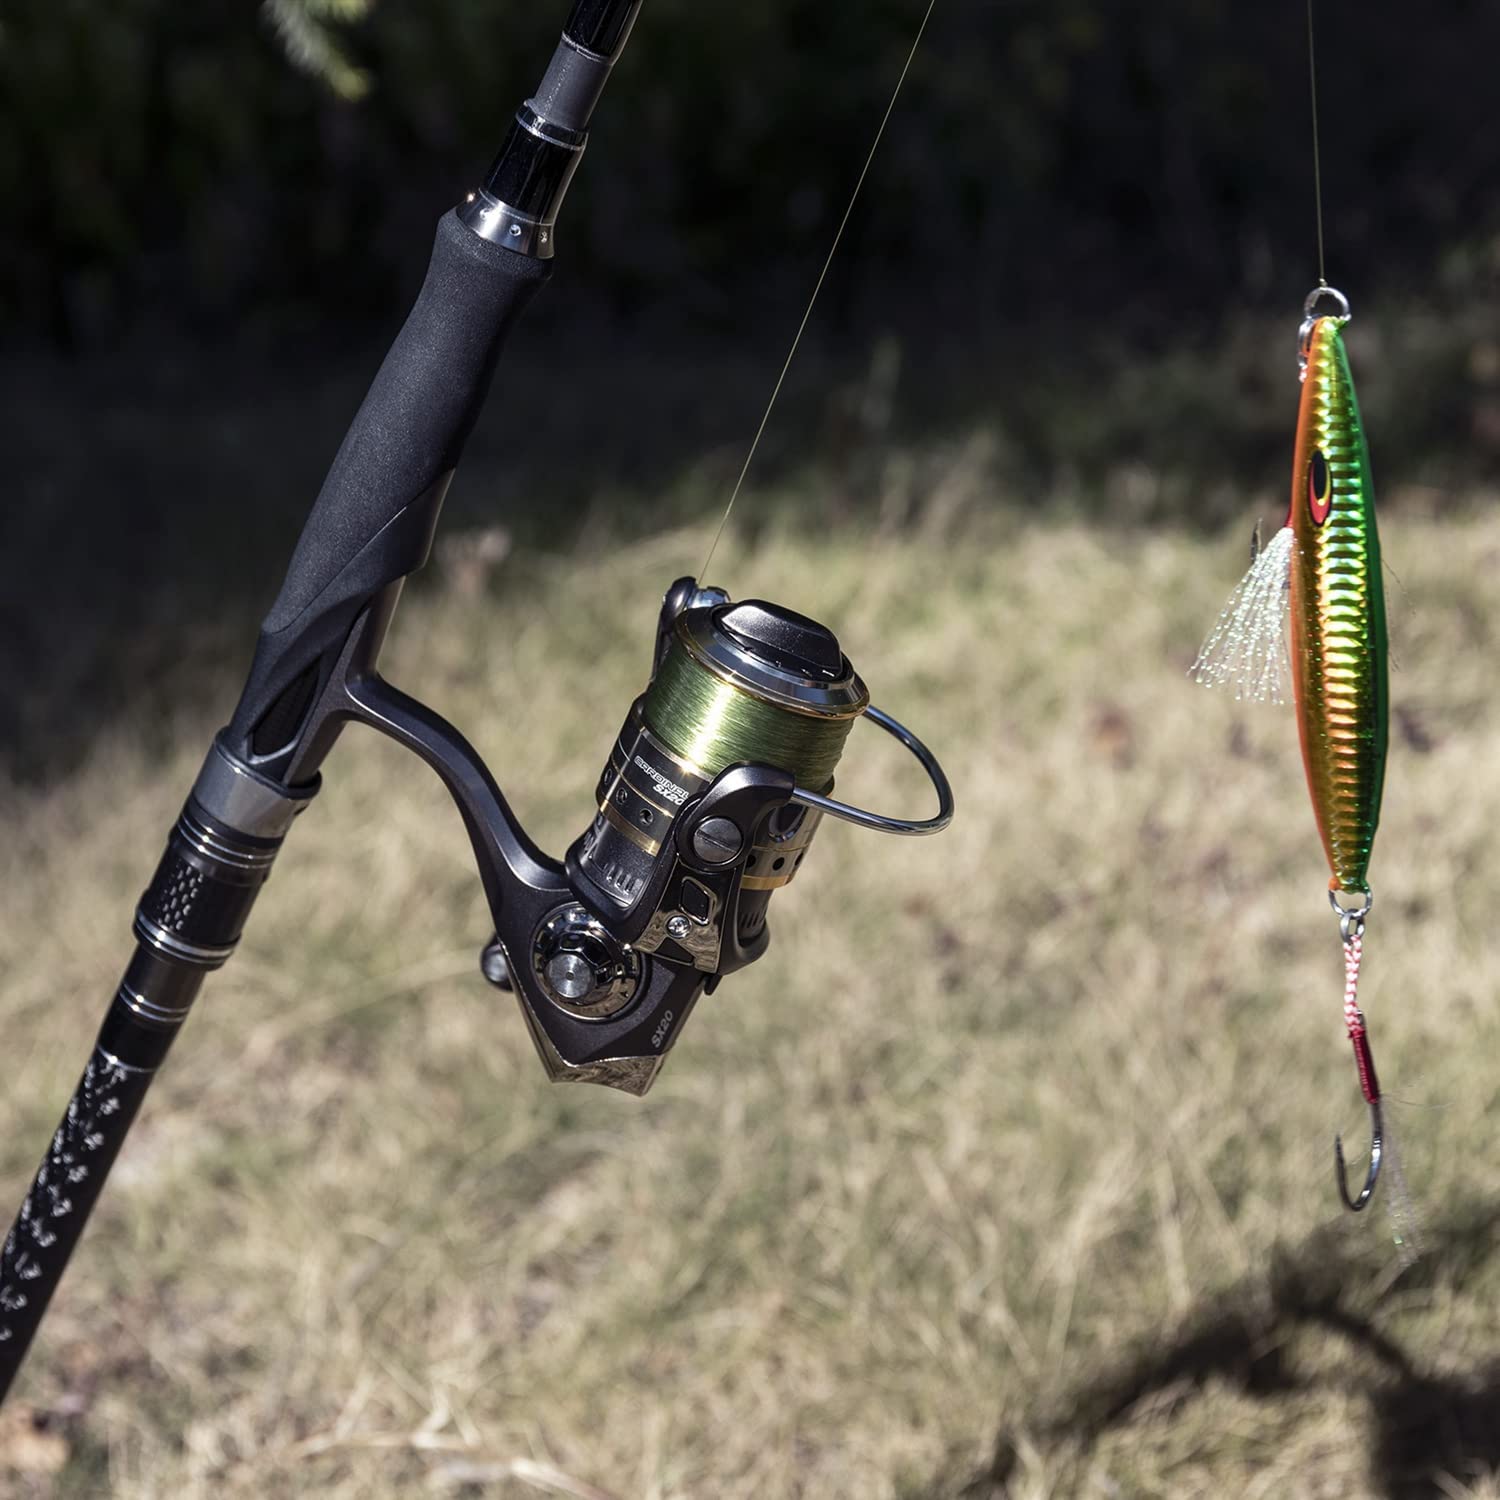 Set Mixed 16pcs/Lot 2 Models Minnows Fishing Lures – Fish Wish Rod